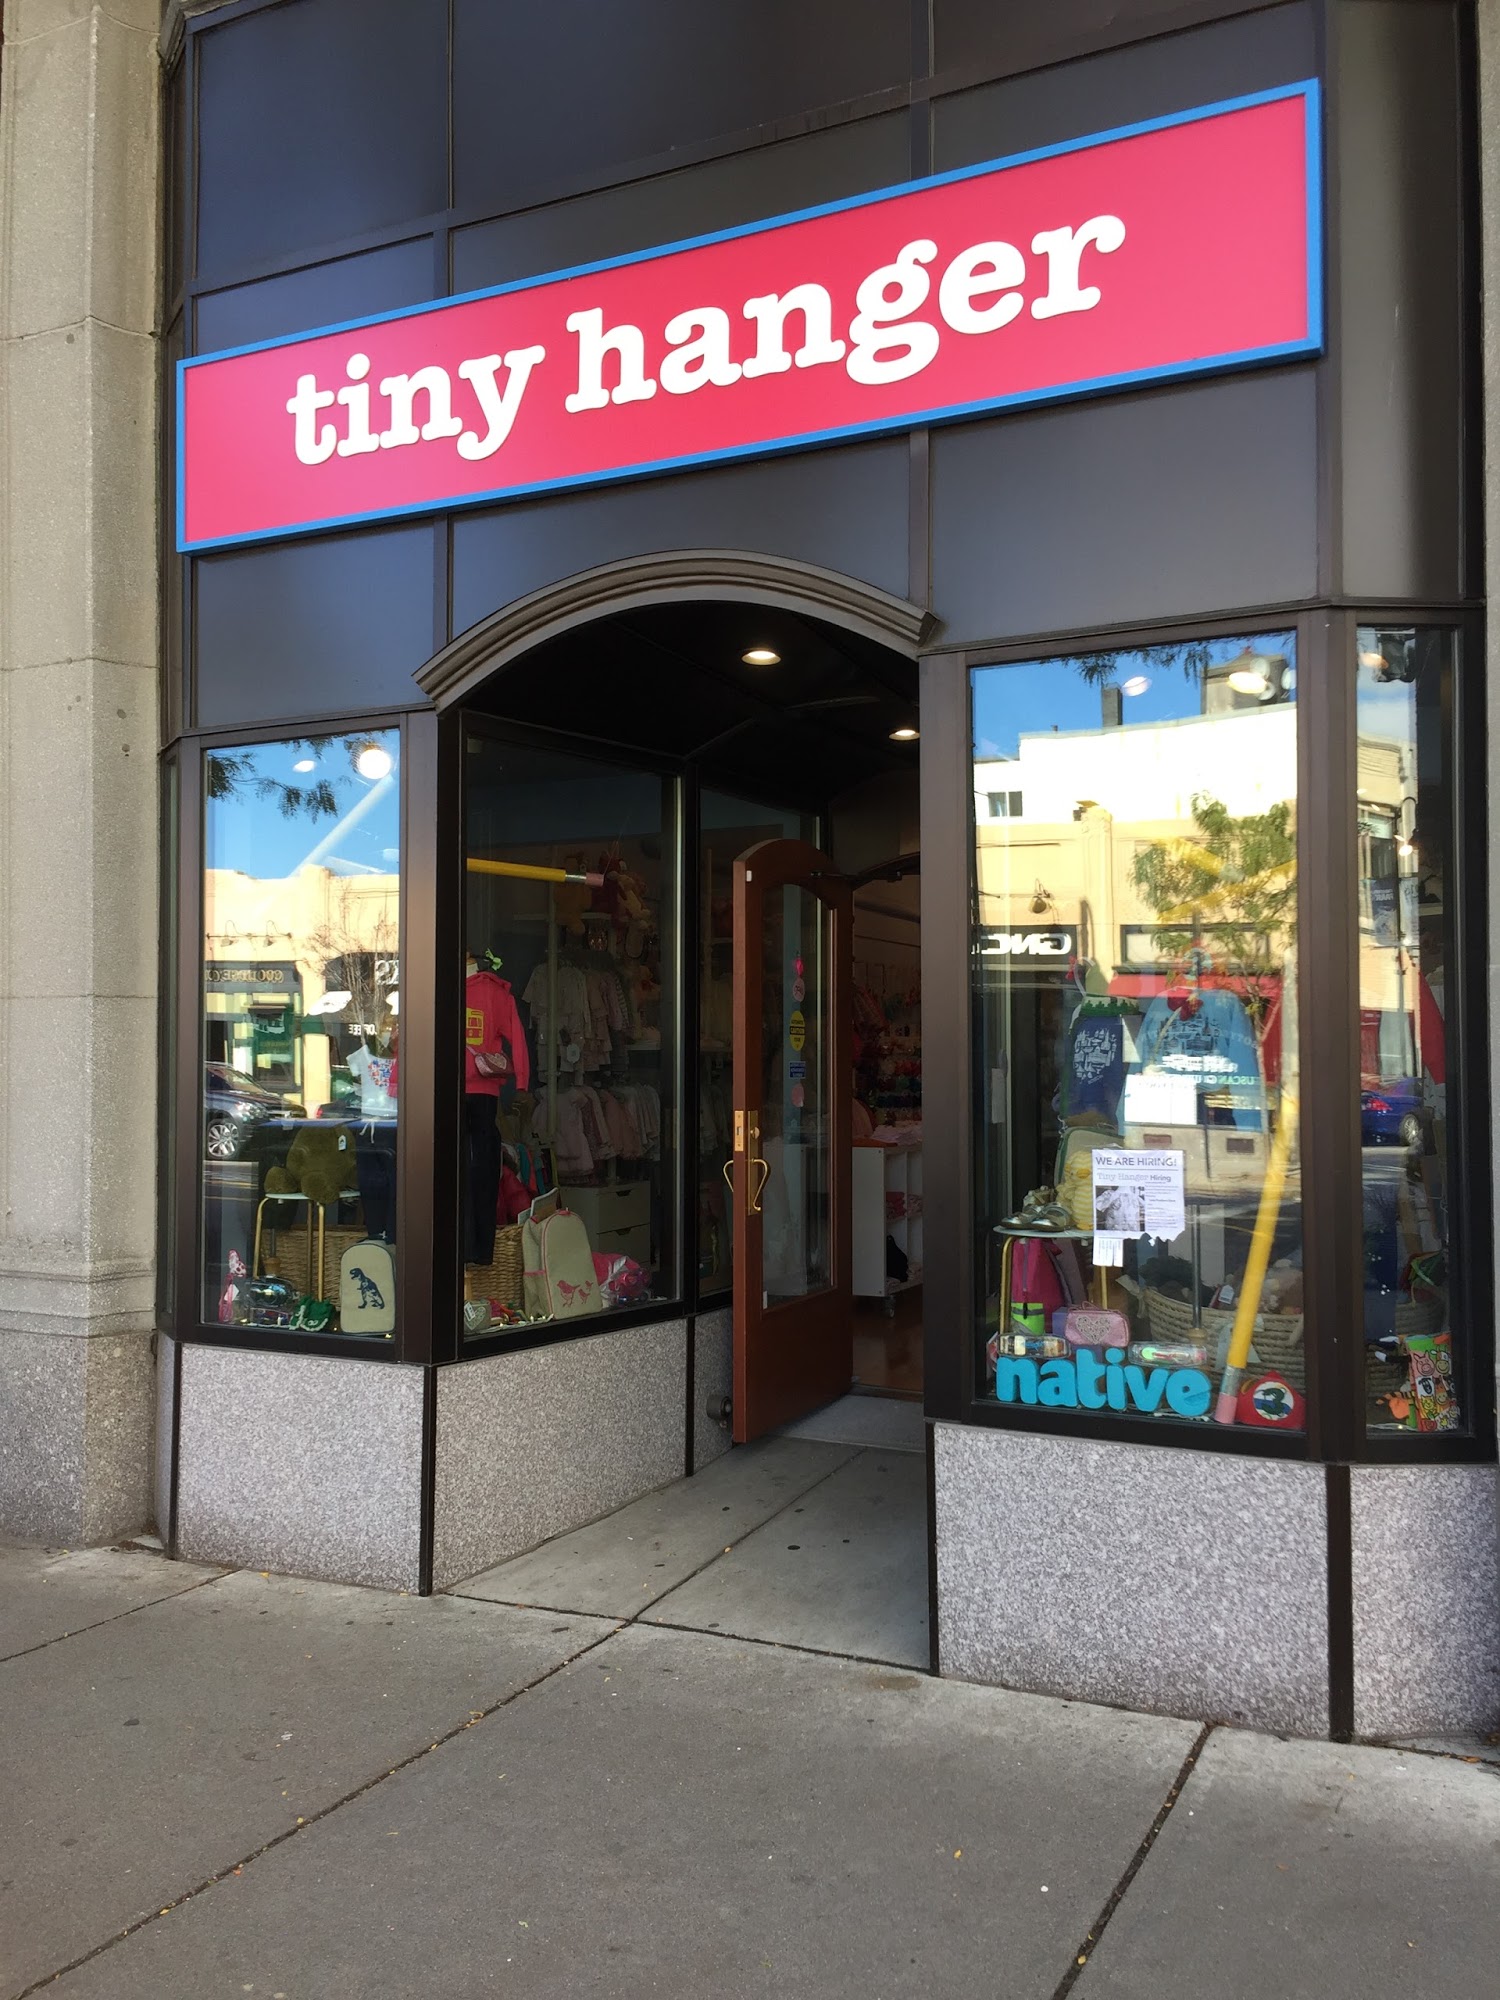 Tiny Hanger